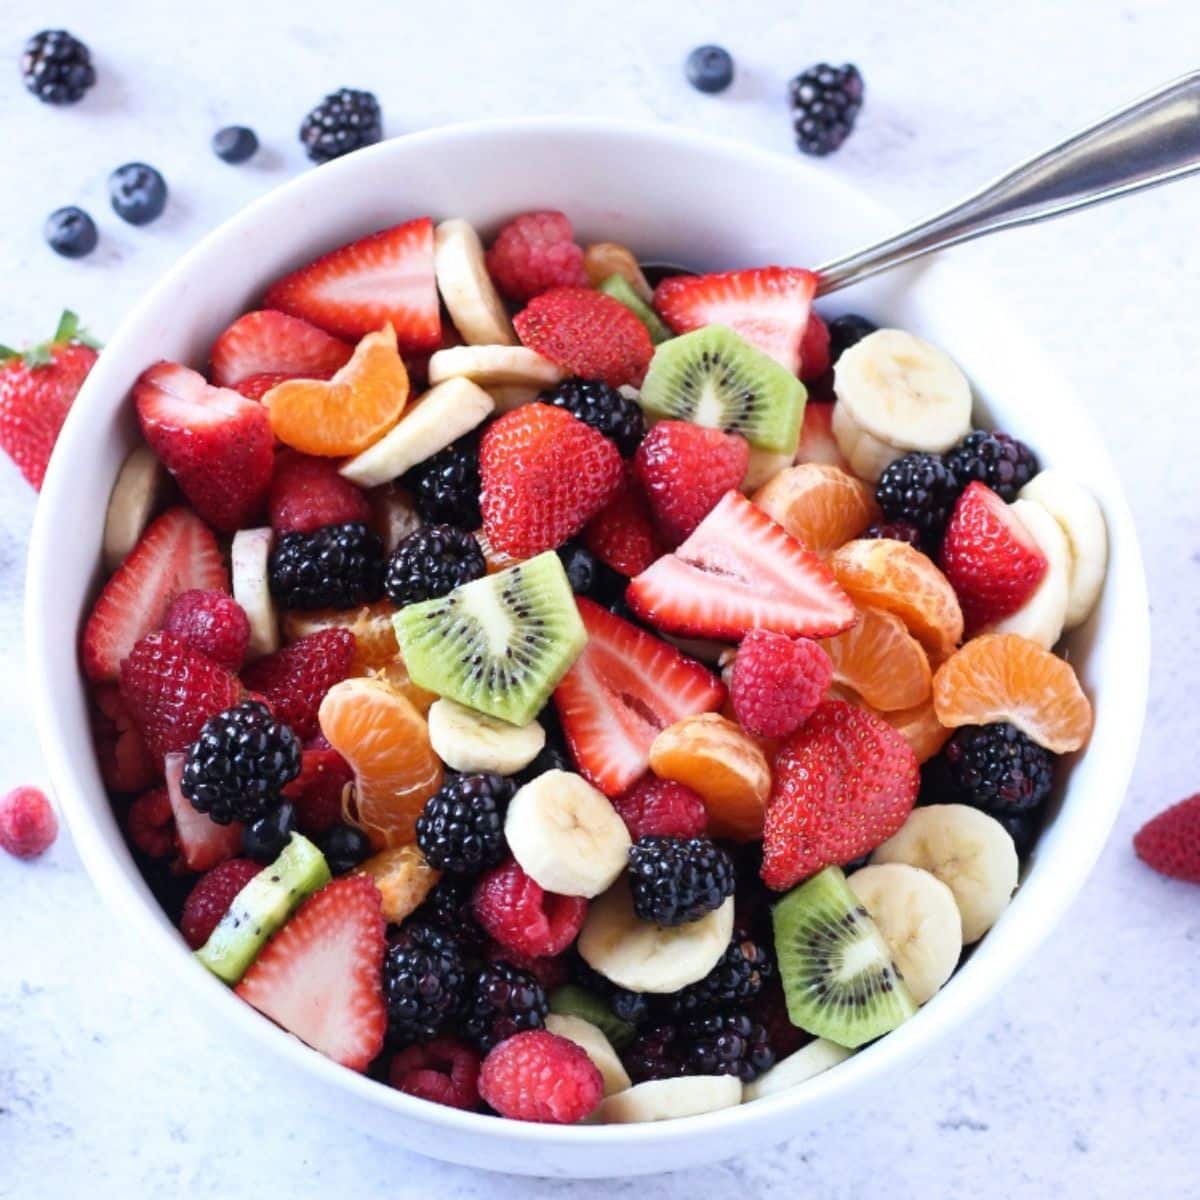 fruit salad made with strawberries, raspberries, kiwi, bananas and blackberries